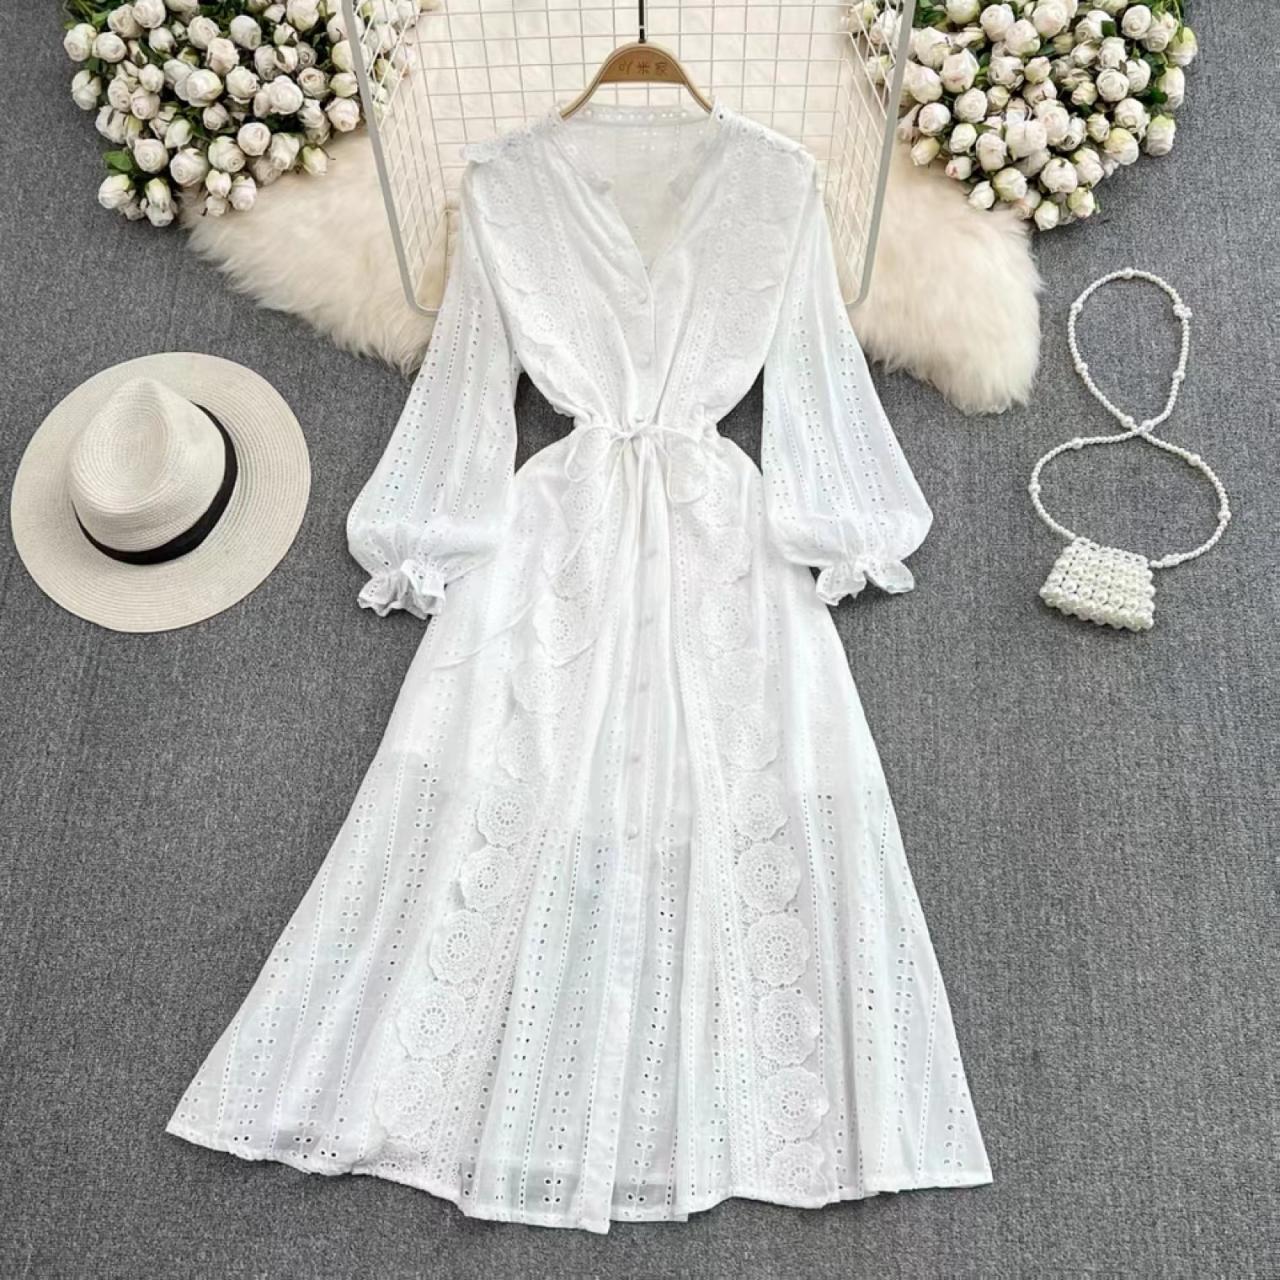 Fairy, White Dress, V-neck Fashionable Beach Holiday Dress,long Sleeve Elegant Dress